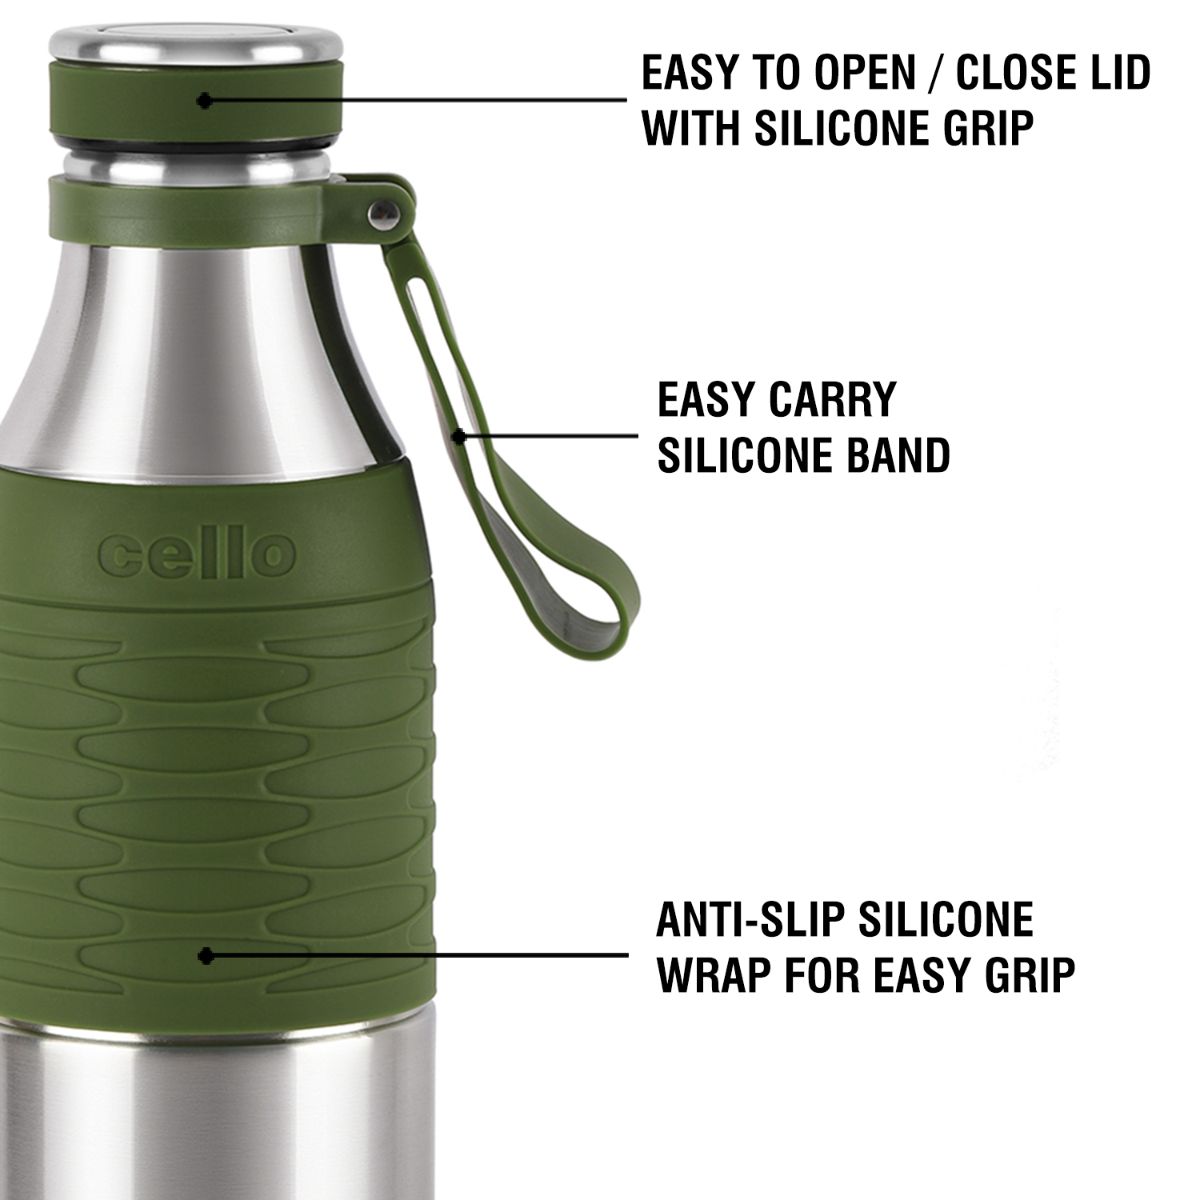 Gripmax Flask, Vacusteel Water Bottle, 600ml / 600ml